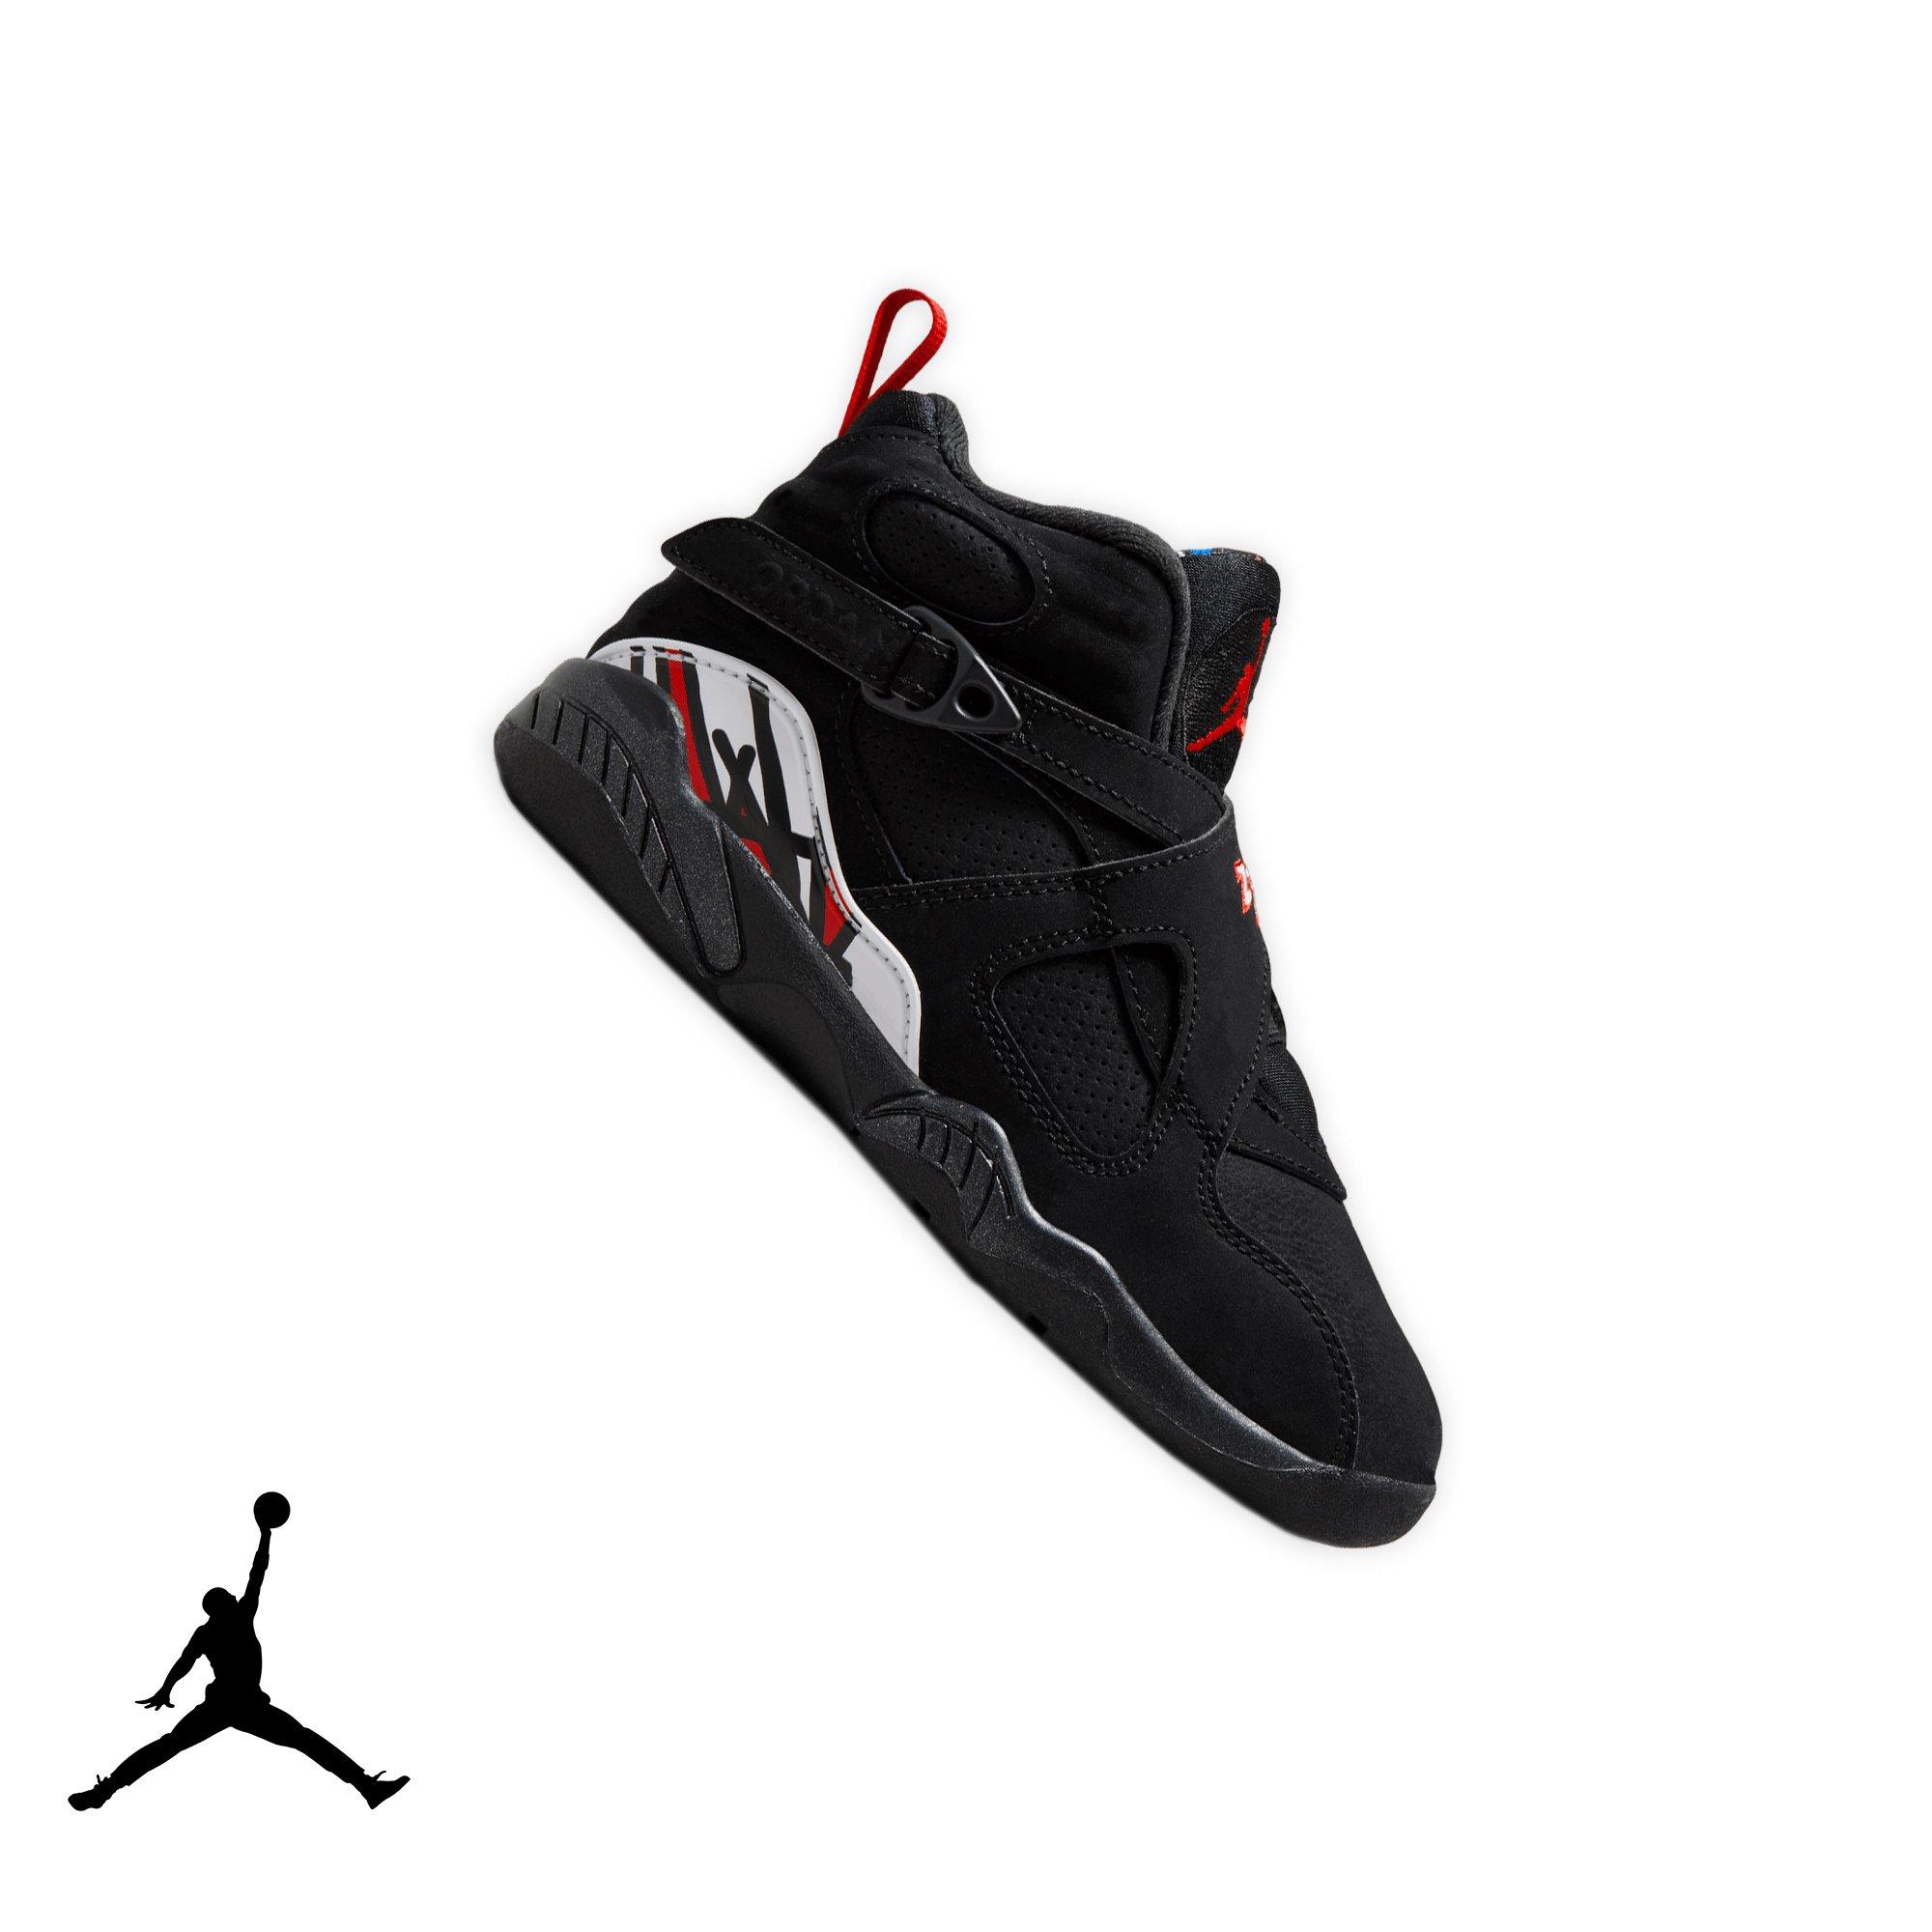 Brand New Jordan Playoff 8s. Size 12. $280. Vintage Micheal Jordan